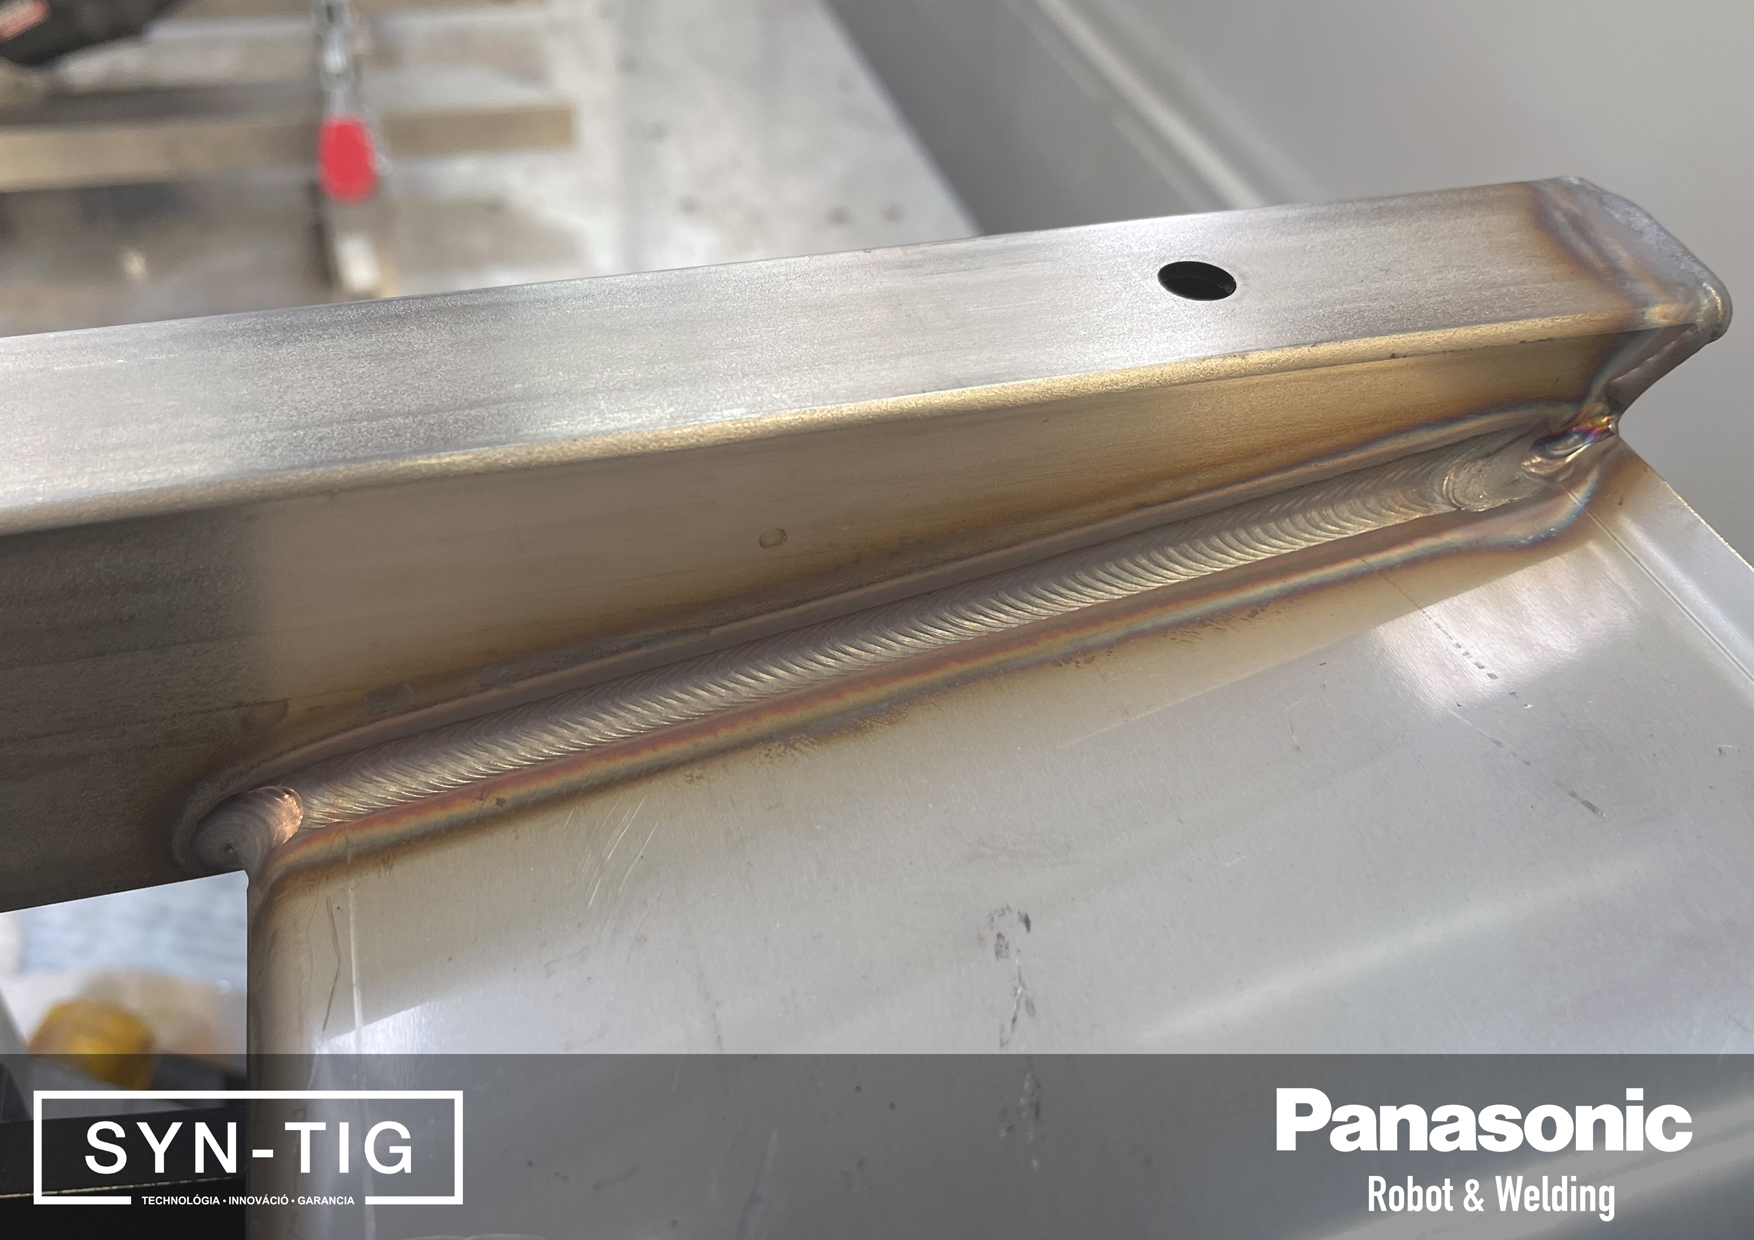 TIG welding with a Panasonic TM-1800WG3 (TAWERS) welding robot